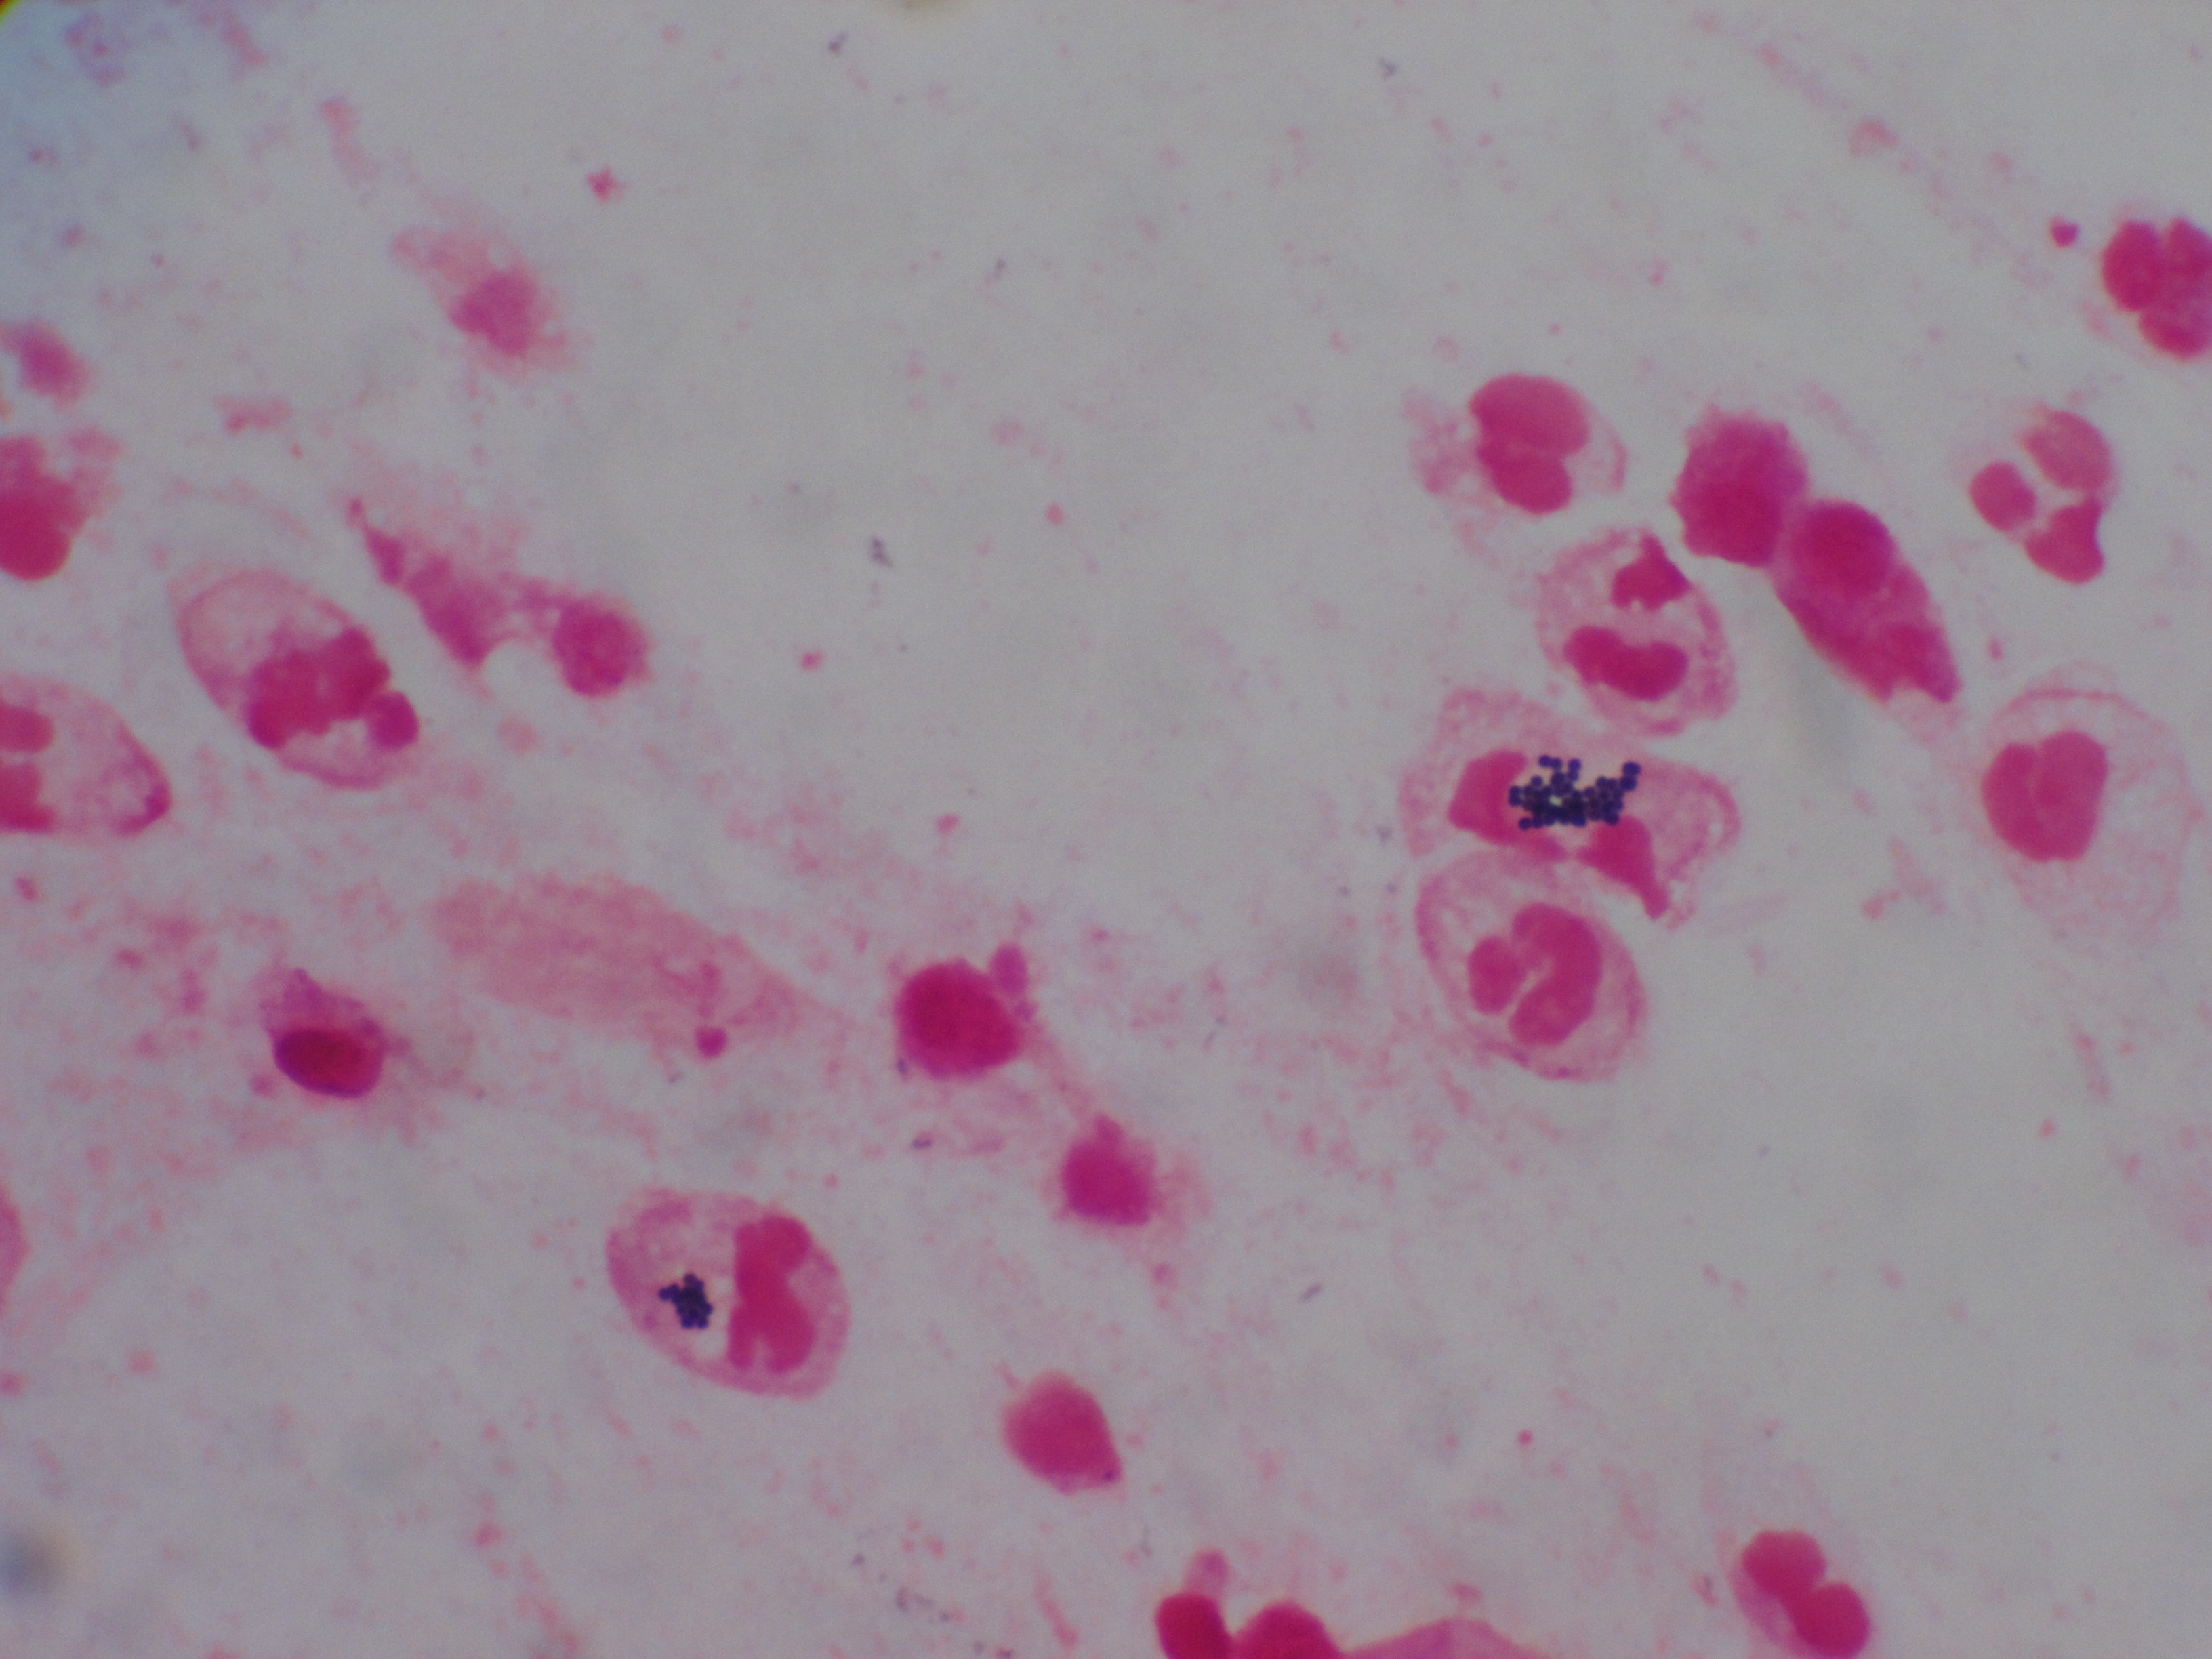 Staphylococcus aureus 〔黄色ブドウ球菌〕